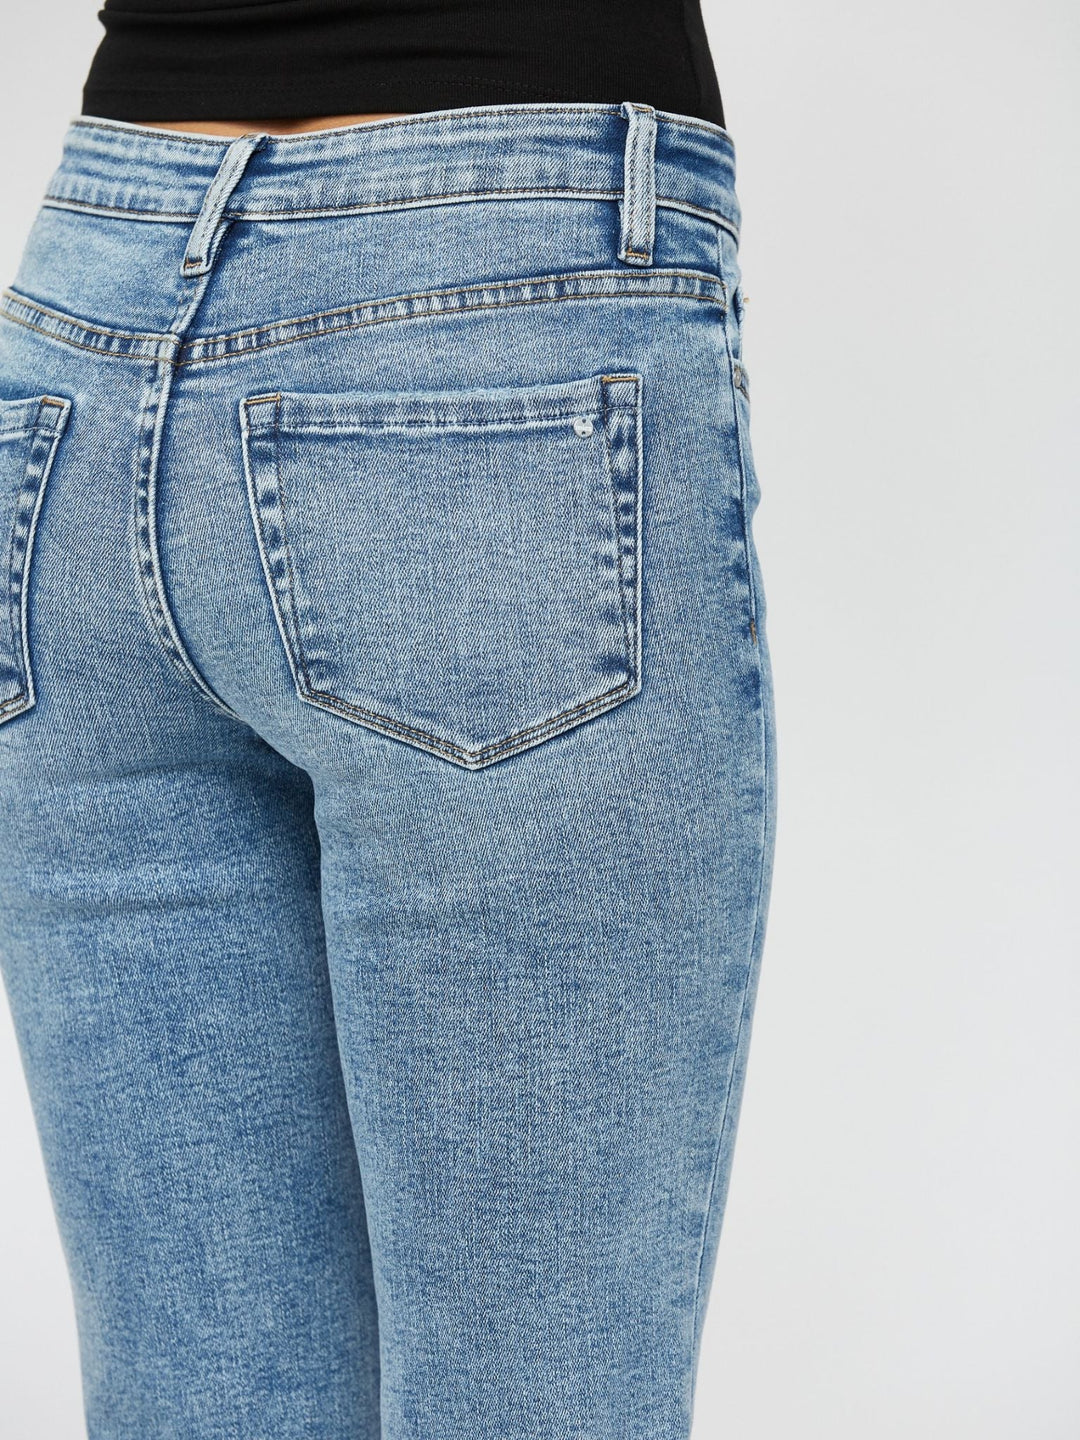 MICA Light Wash Mid Rise Slim StraightDenim jeans